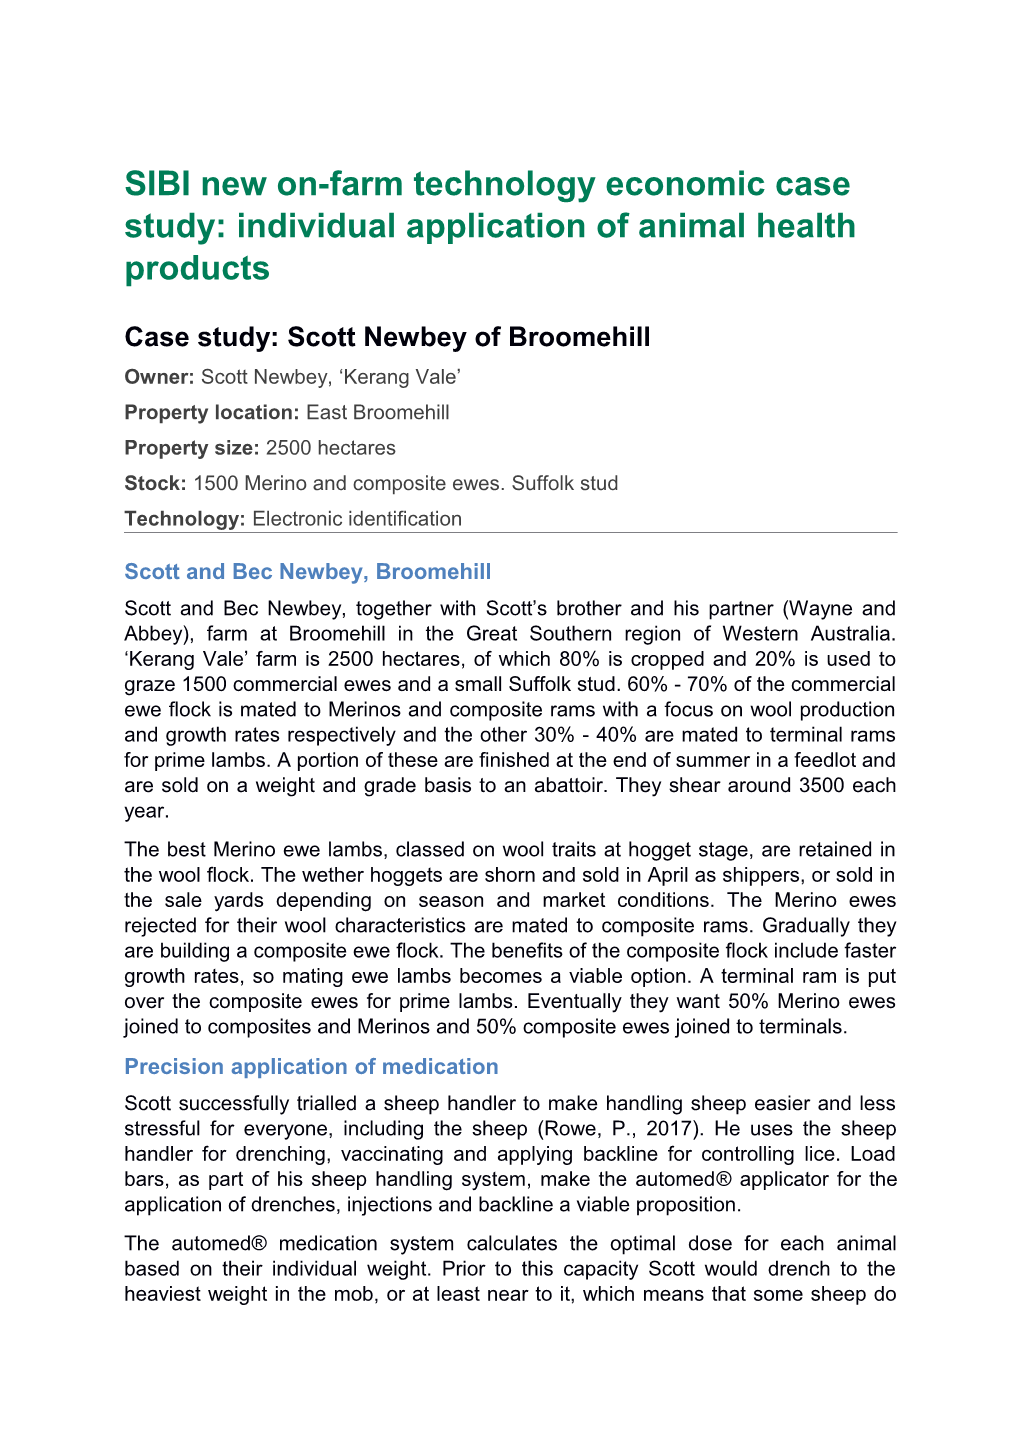 SIBI New On-Farm Technology Economic Case Study: Individual Application of Animal Health